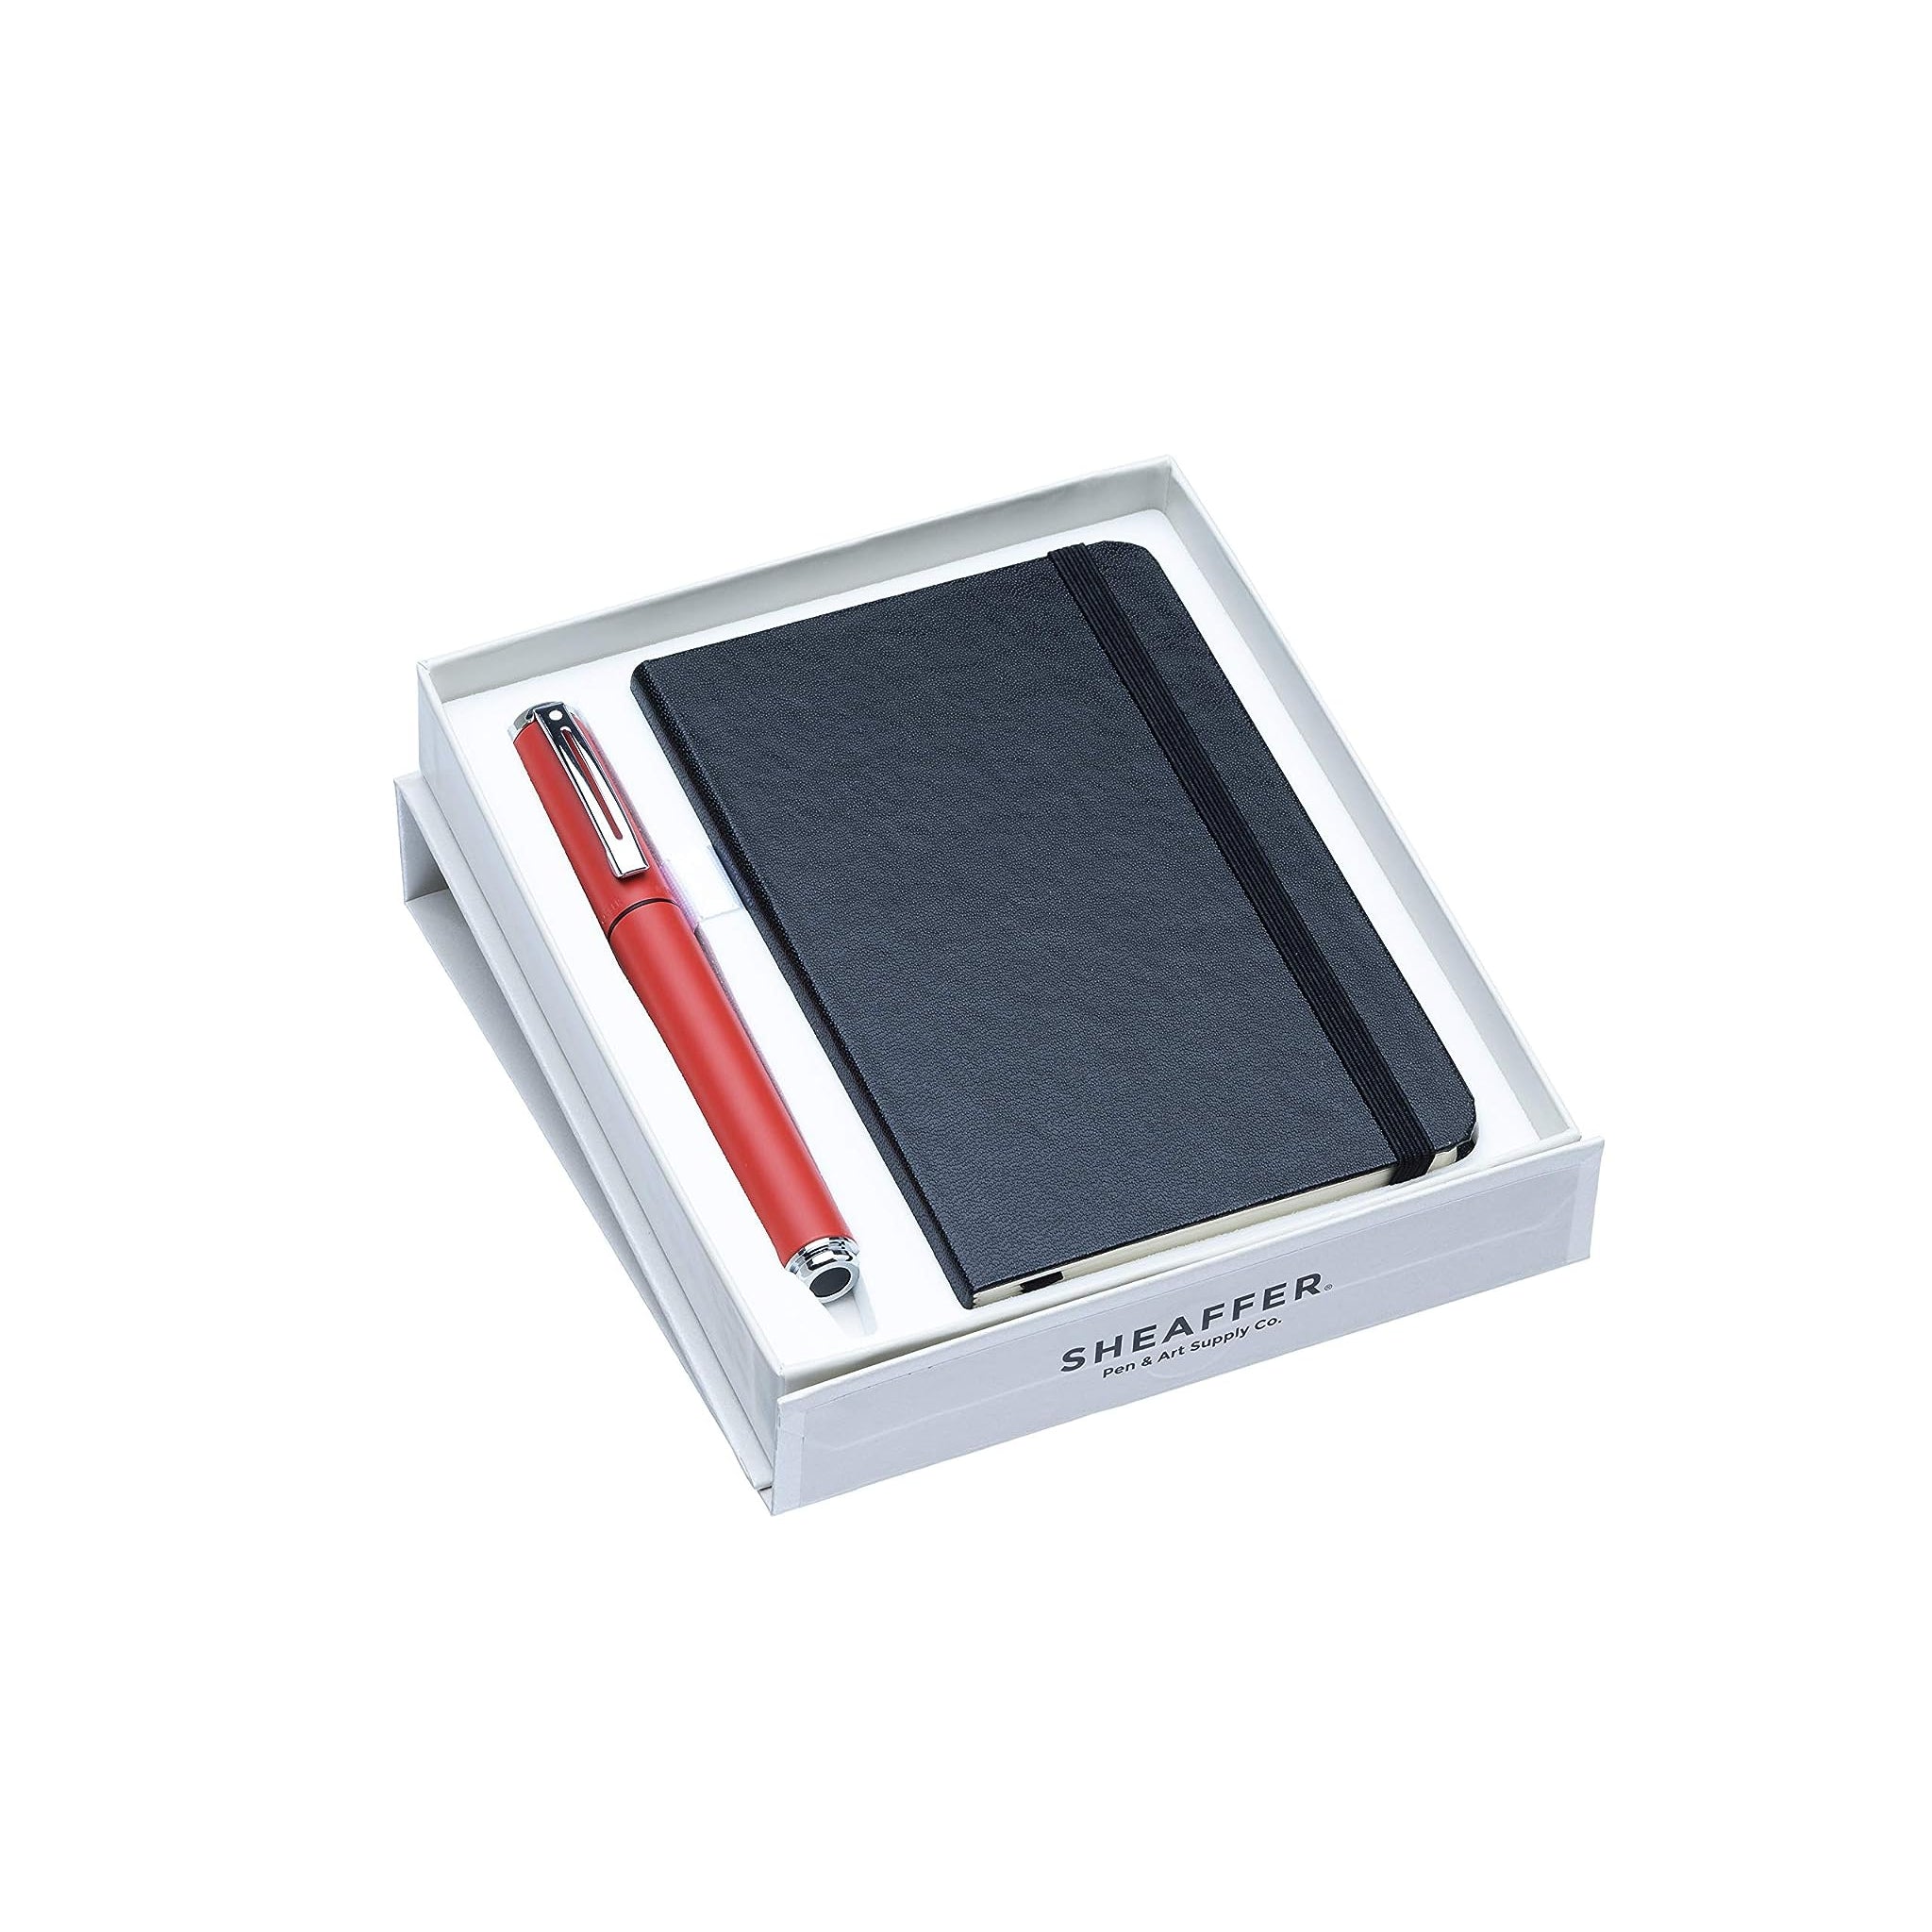 Sheaffer A6 Notebook With Pen